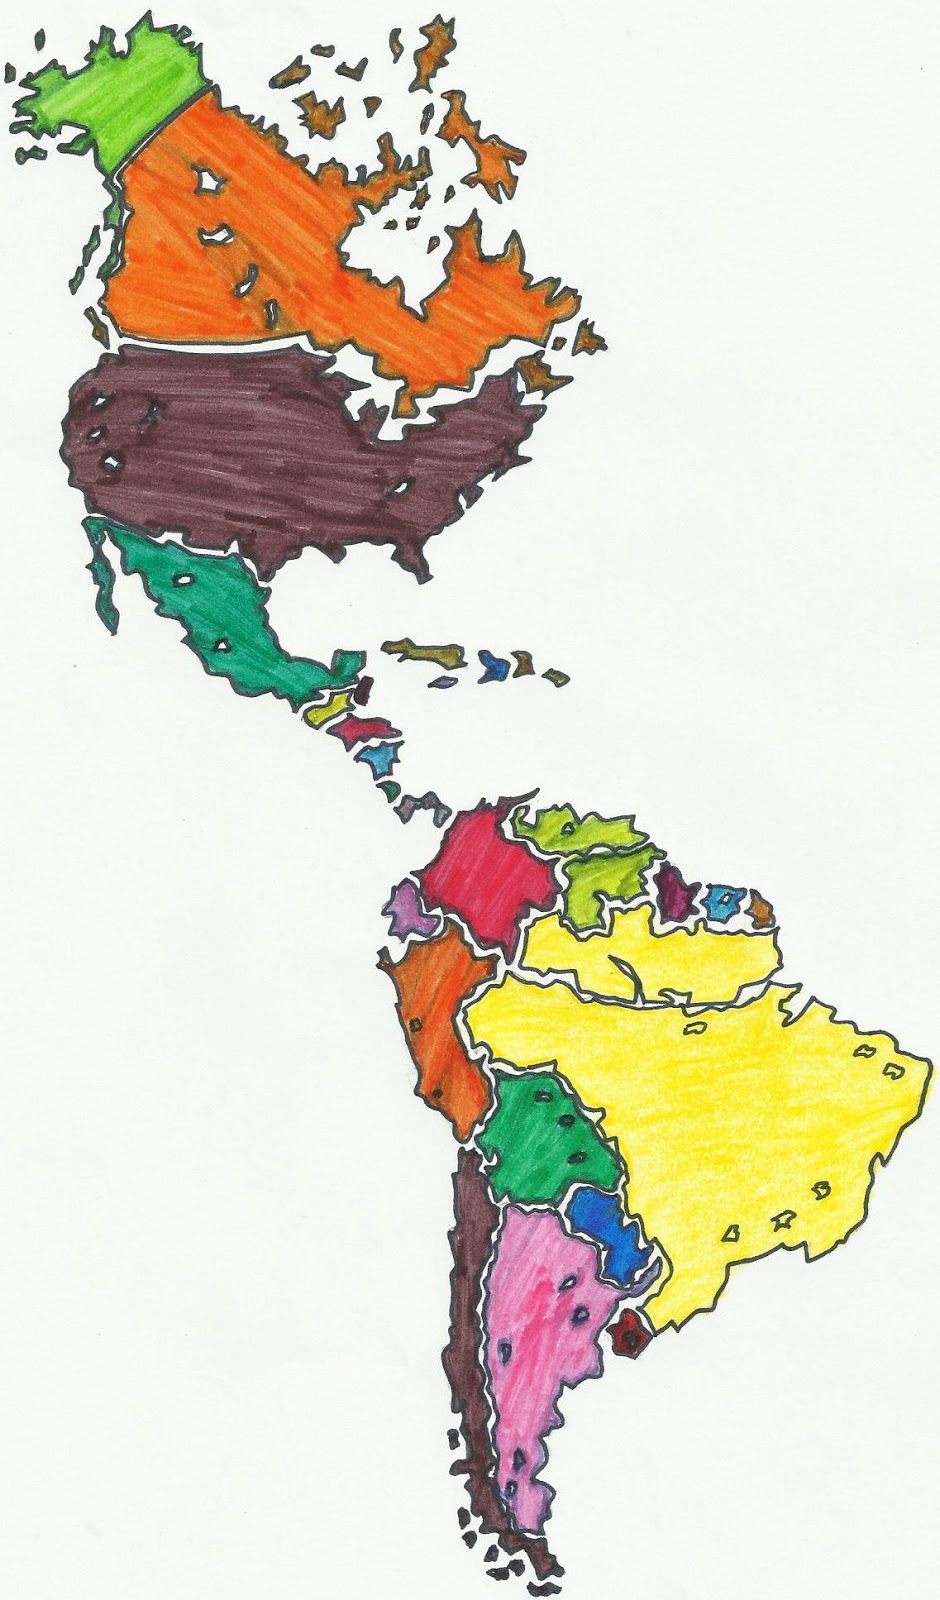 GEOGRAFIA DEL PERU Y DEL MUNDO-DIBUJOS-IMAGENES: DIBUJO-MAPA DEL CONTINENTE  AMERICANO-IMPRIMIR-COLOREAR